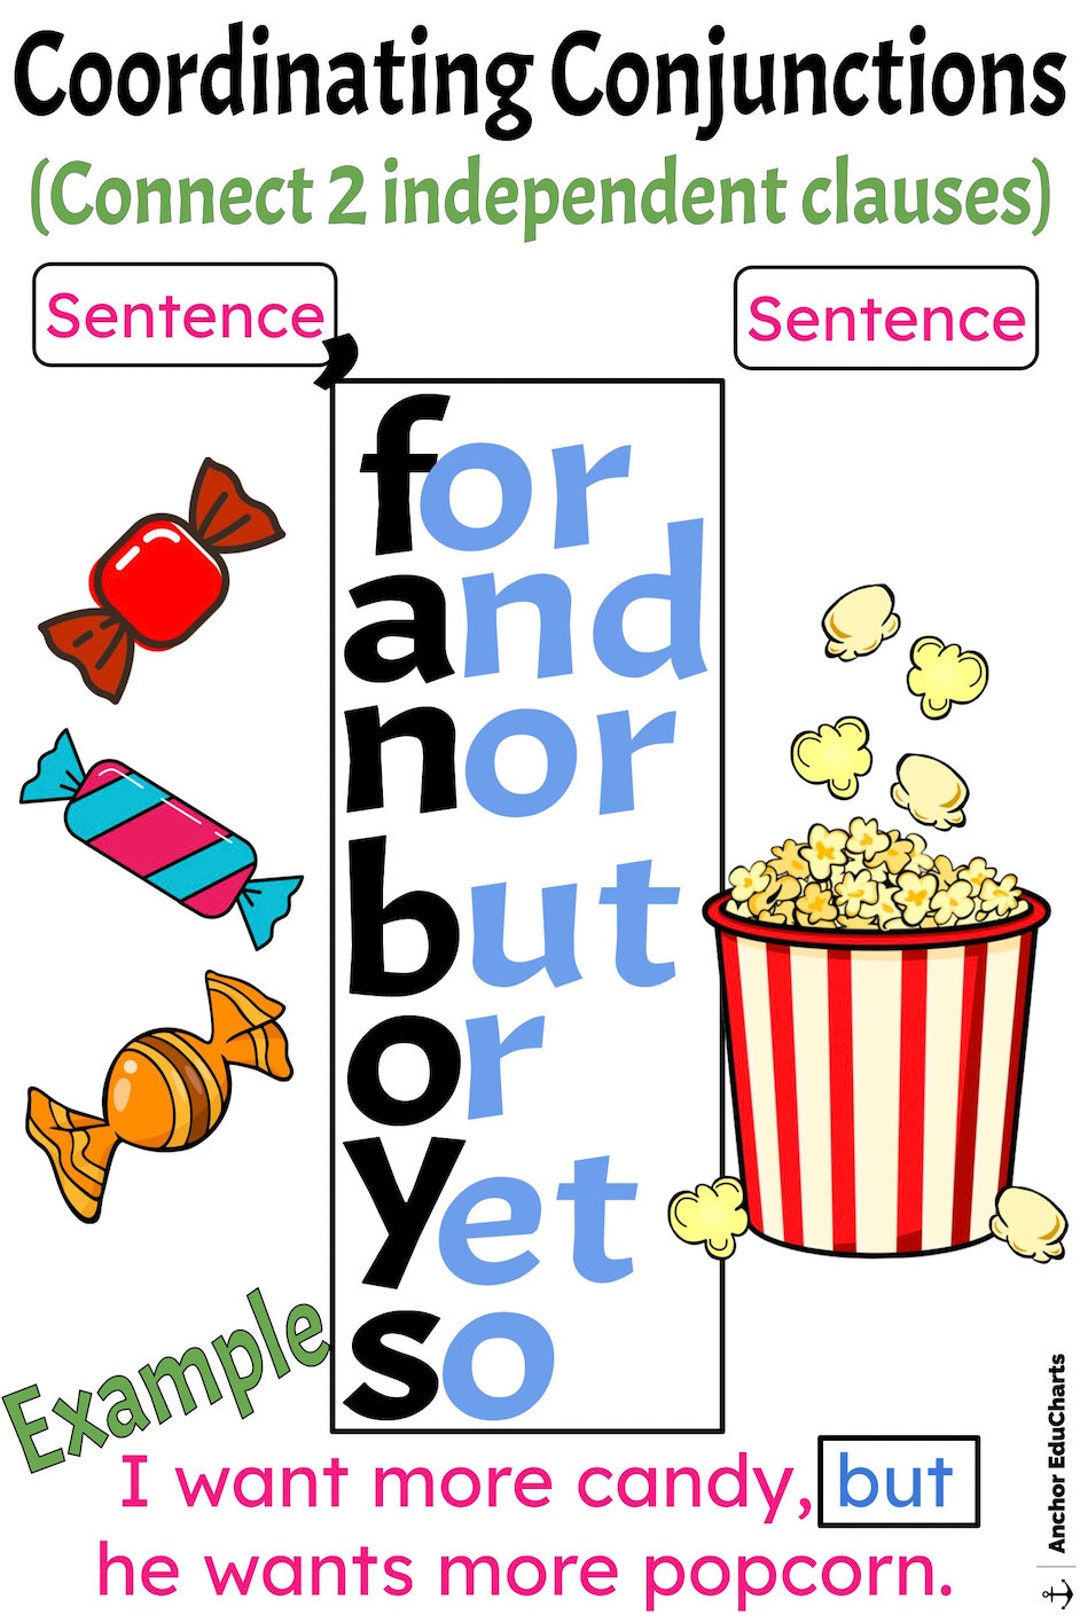 Fanboys Grammar Examples!